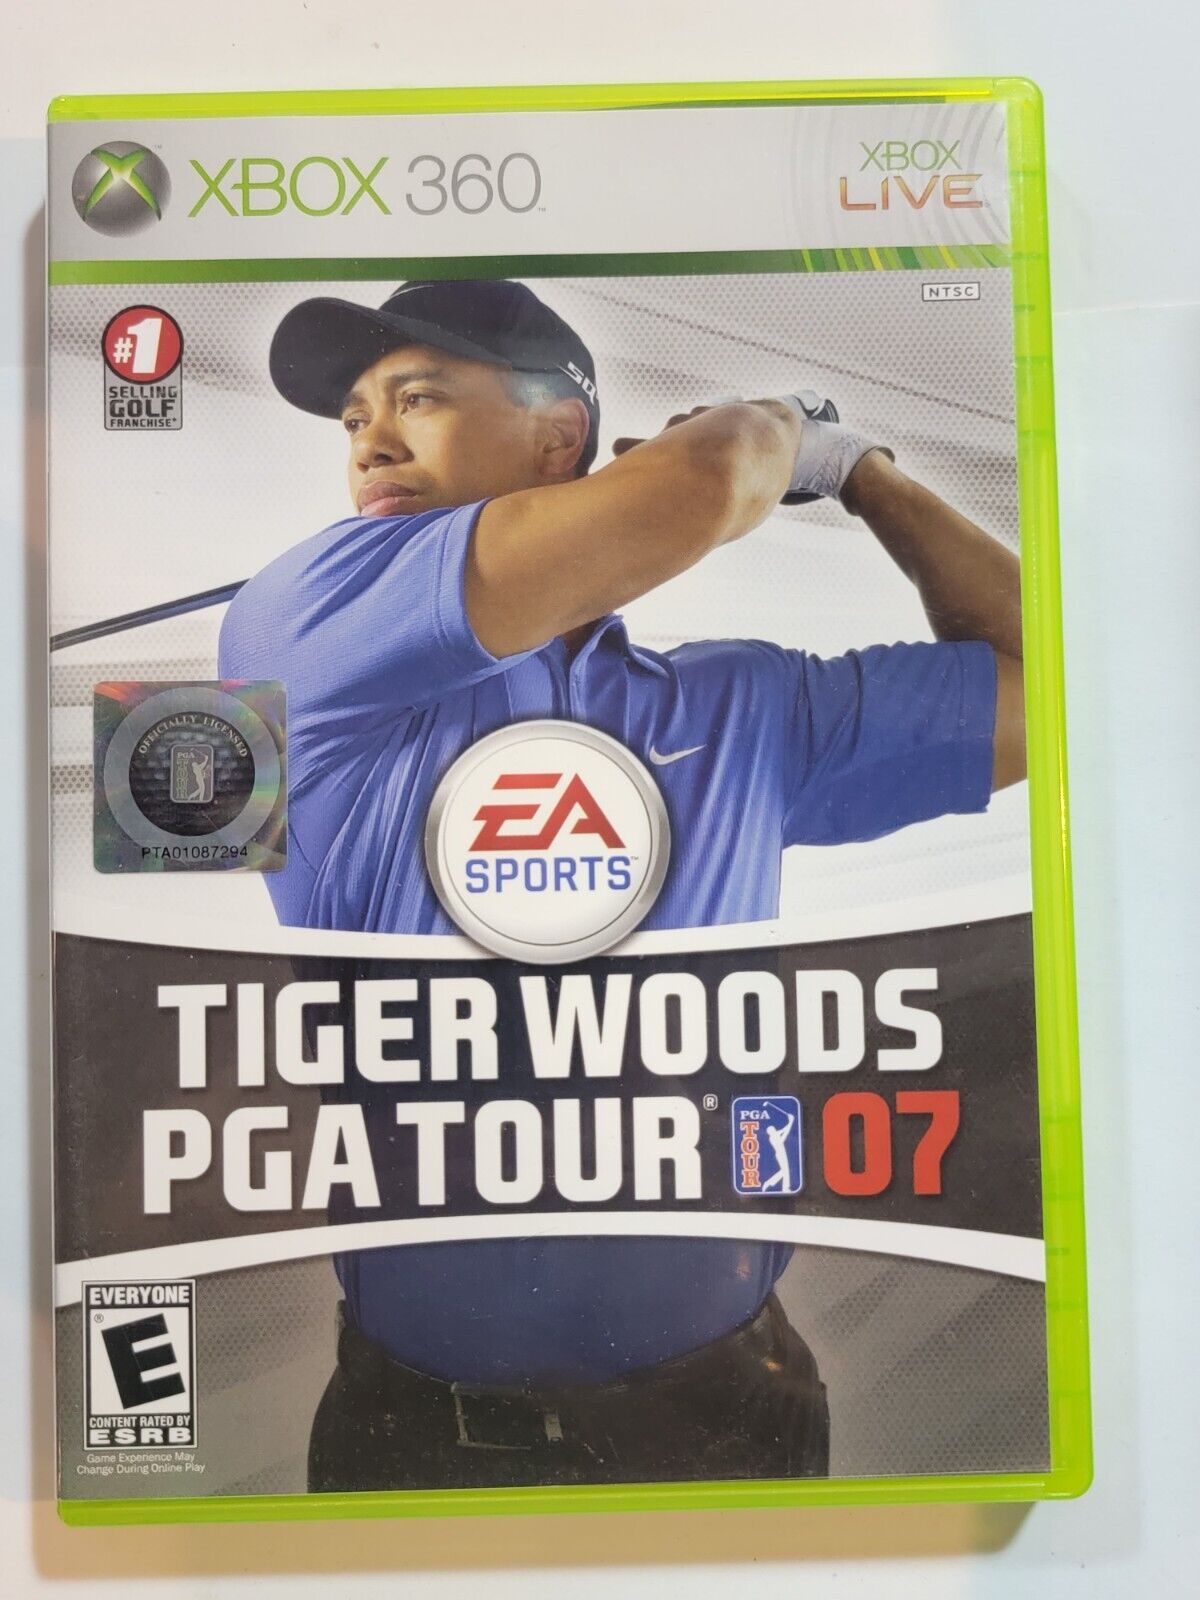 Tiger Woods Pga Tour 07 (Xbox 360)